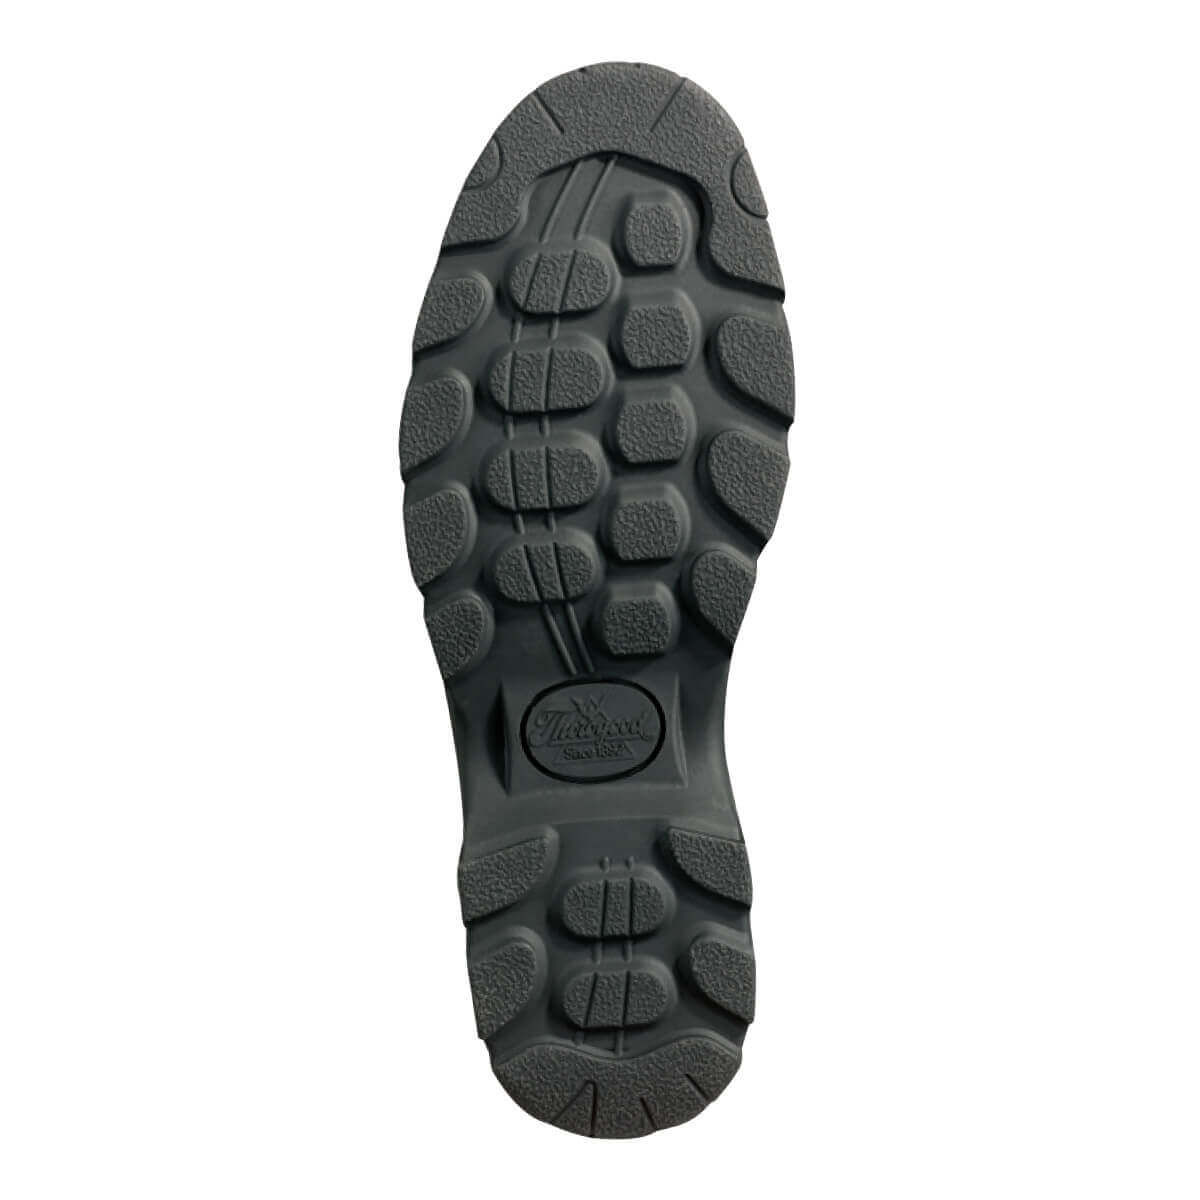 Thorogood Softstreets 834-6907 Men's Black Leather Moc Toe Oxford Shoes 